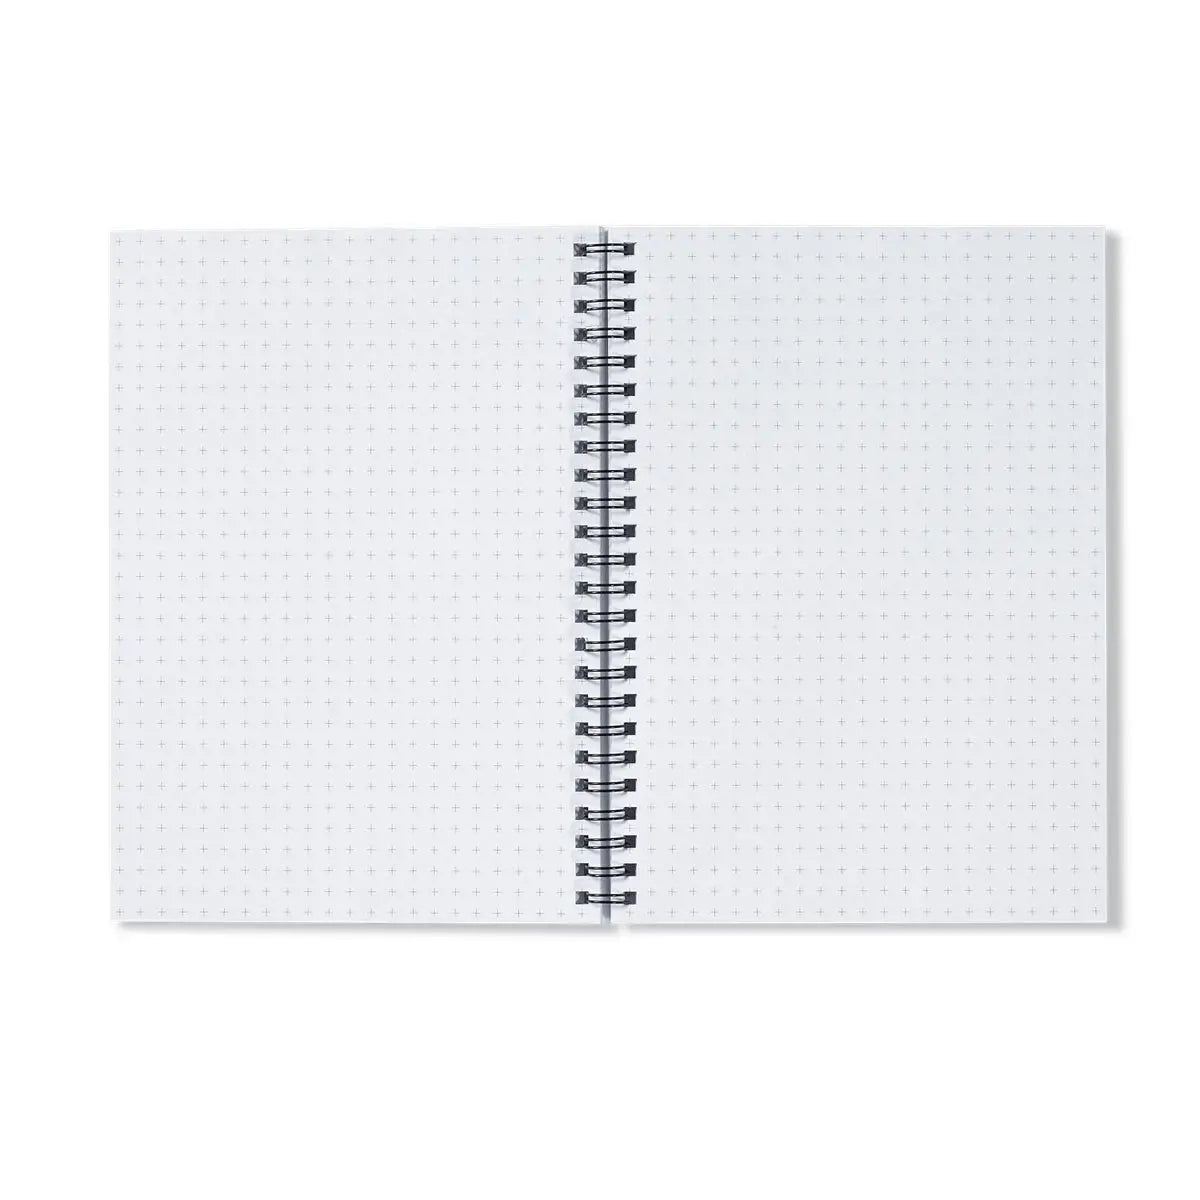 Polystichum Munitum (prickly Shield–fern) - Karl Blossfeldt Notebook - Notebooks & Notepads - Aesthetic Art